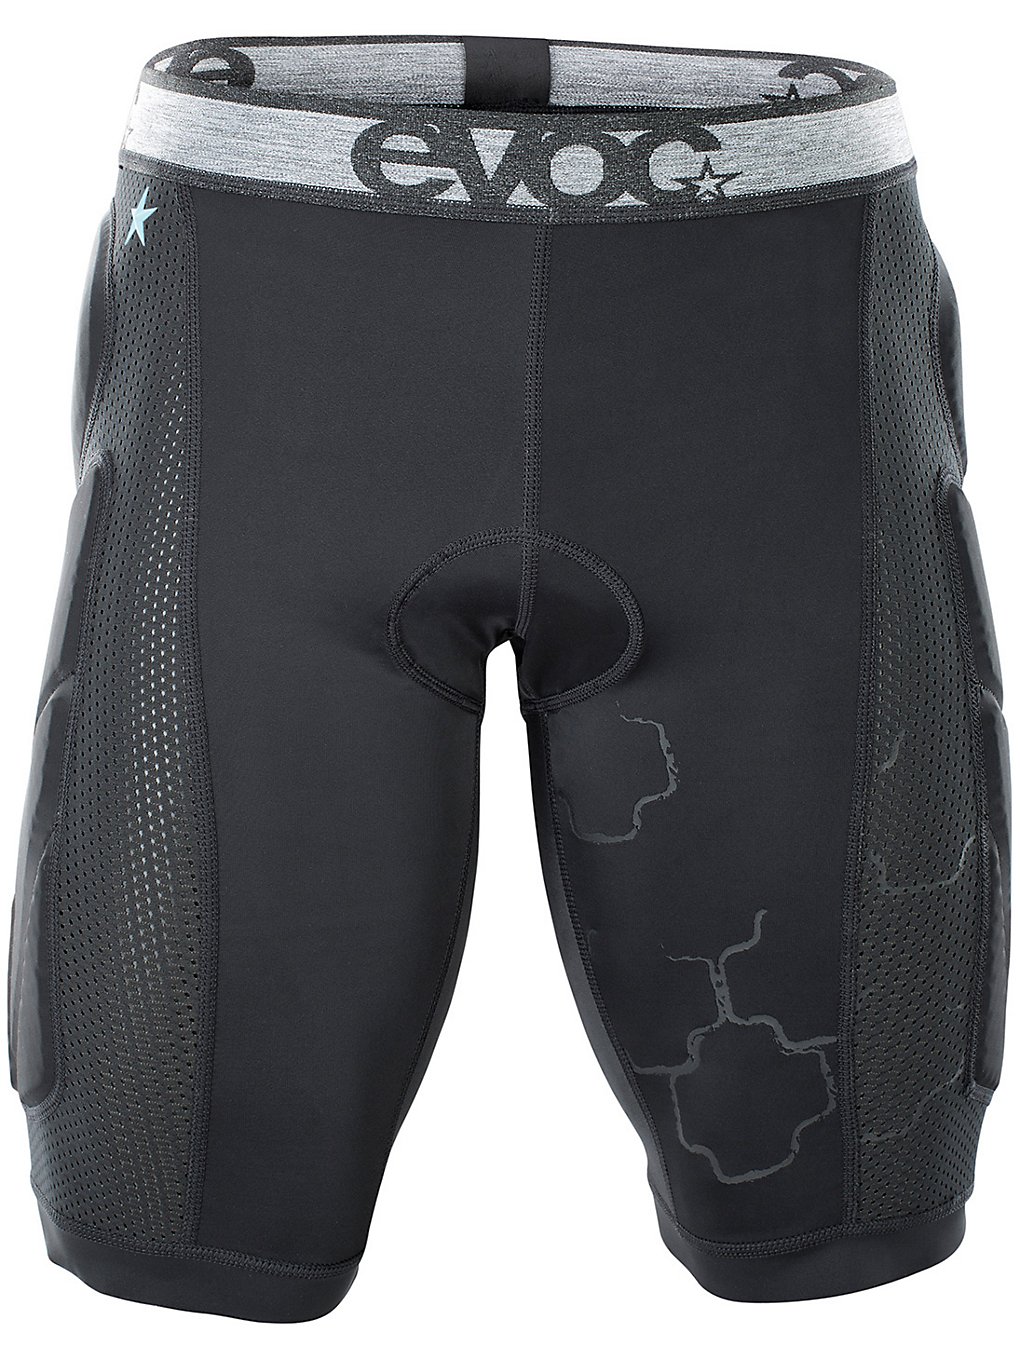 Evoc Crash Pad Protection Pants black kaufen